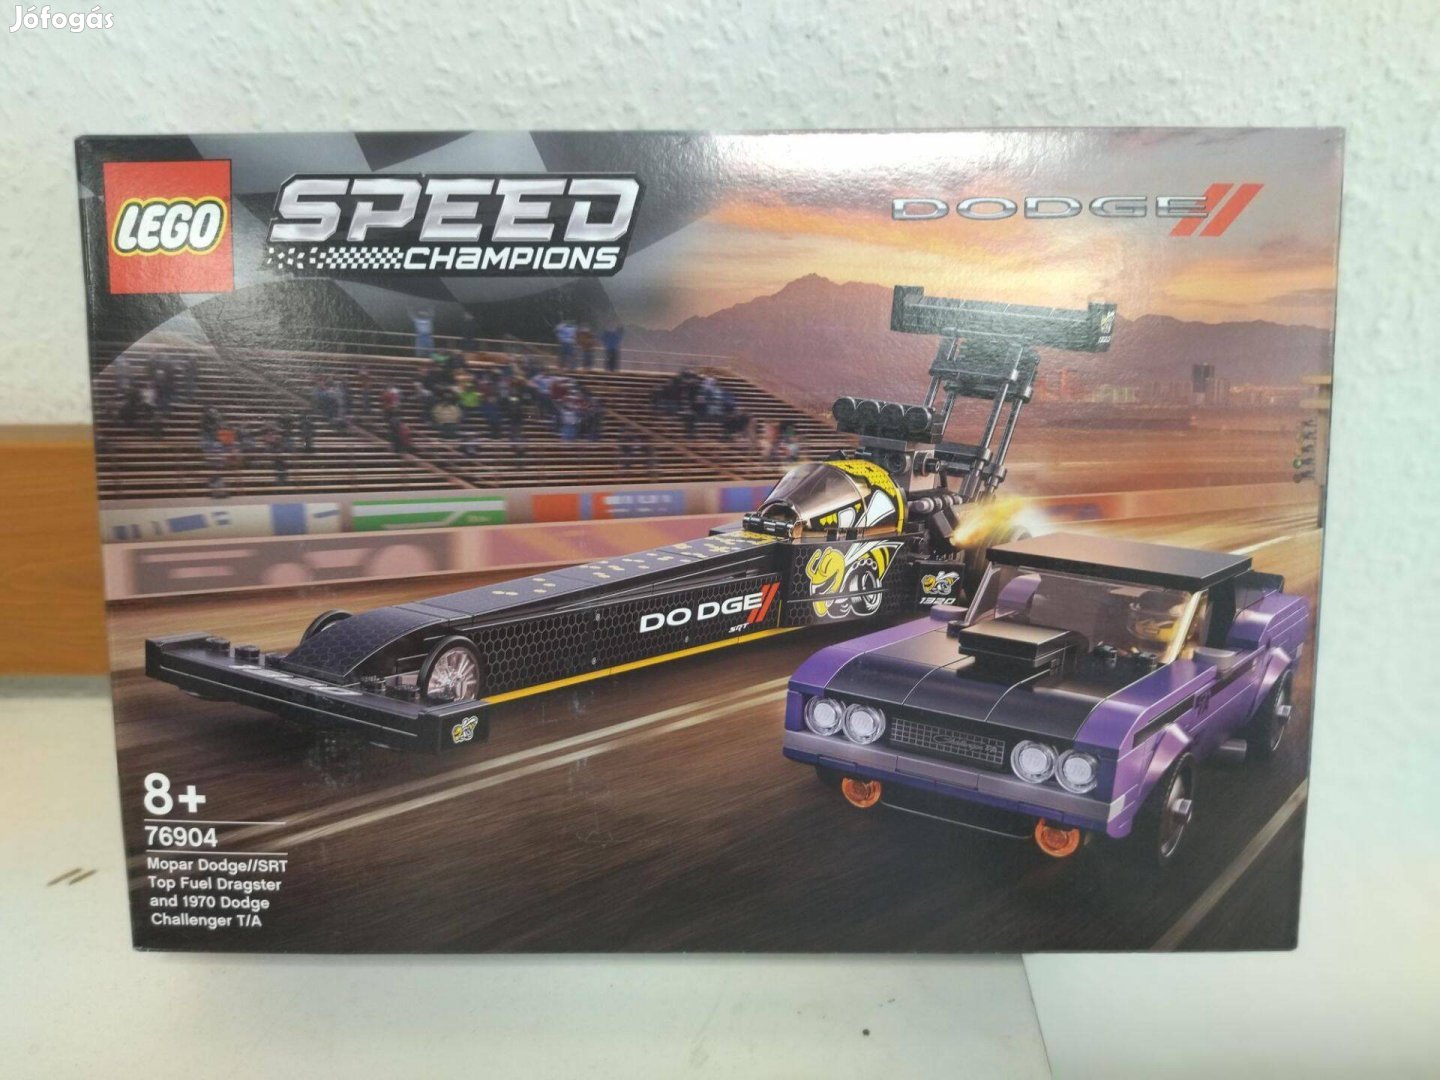 Lego Speed Champions 76904 Mopar Dodge/SRT Dragster és 1970 Dodge új